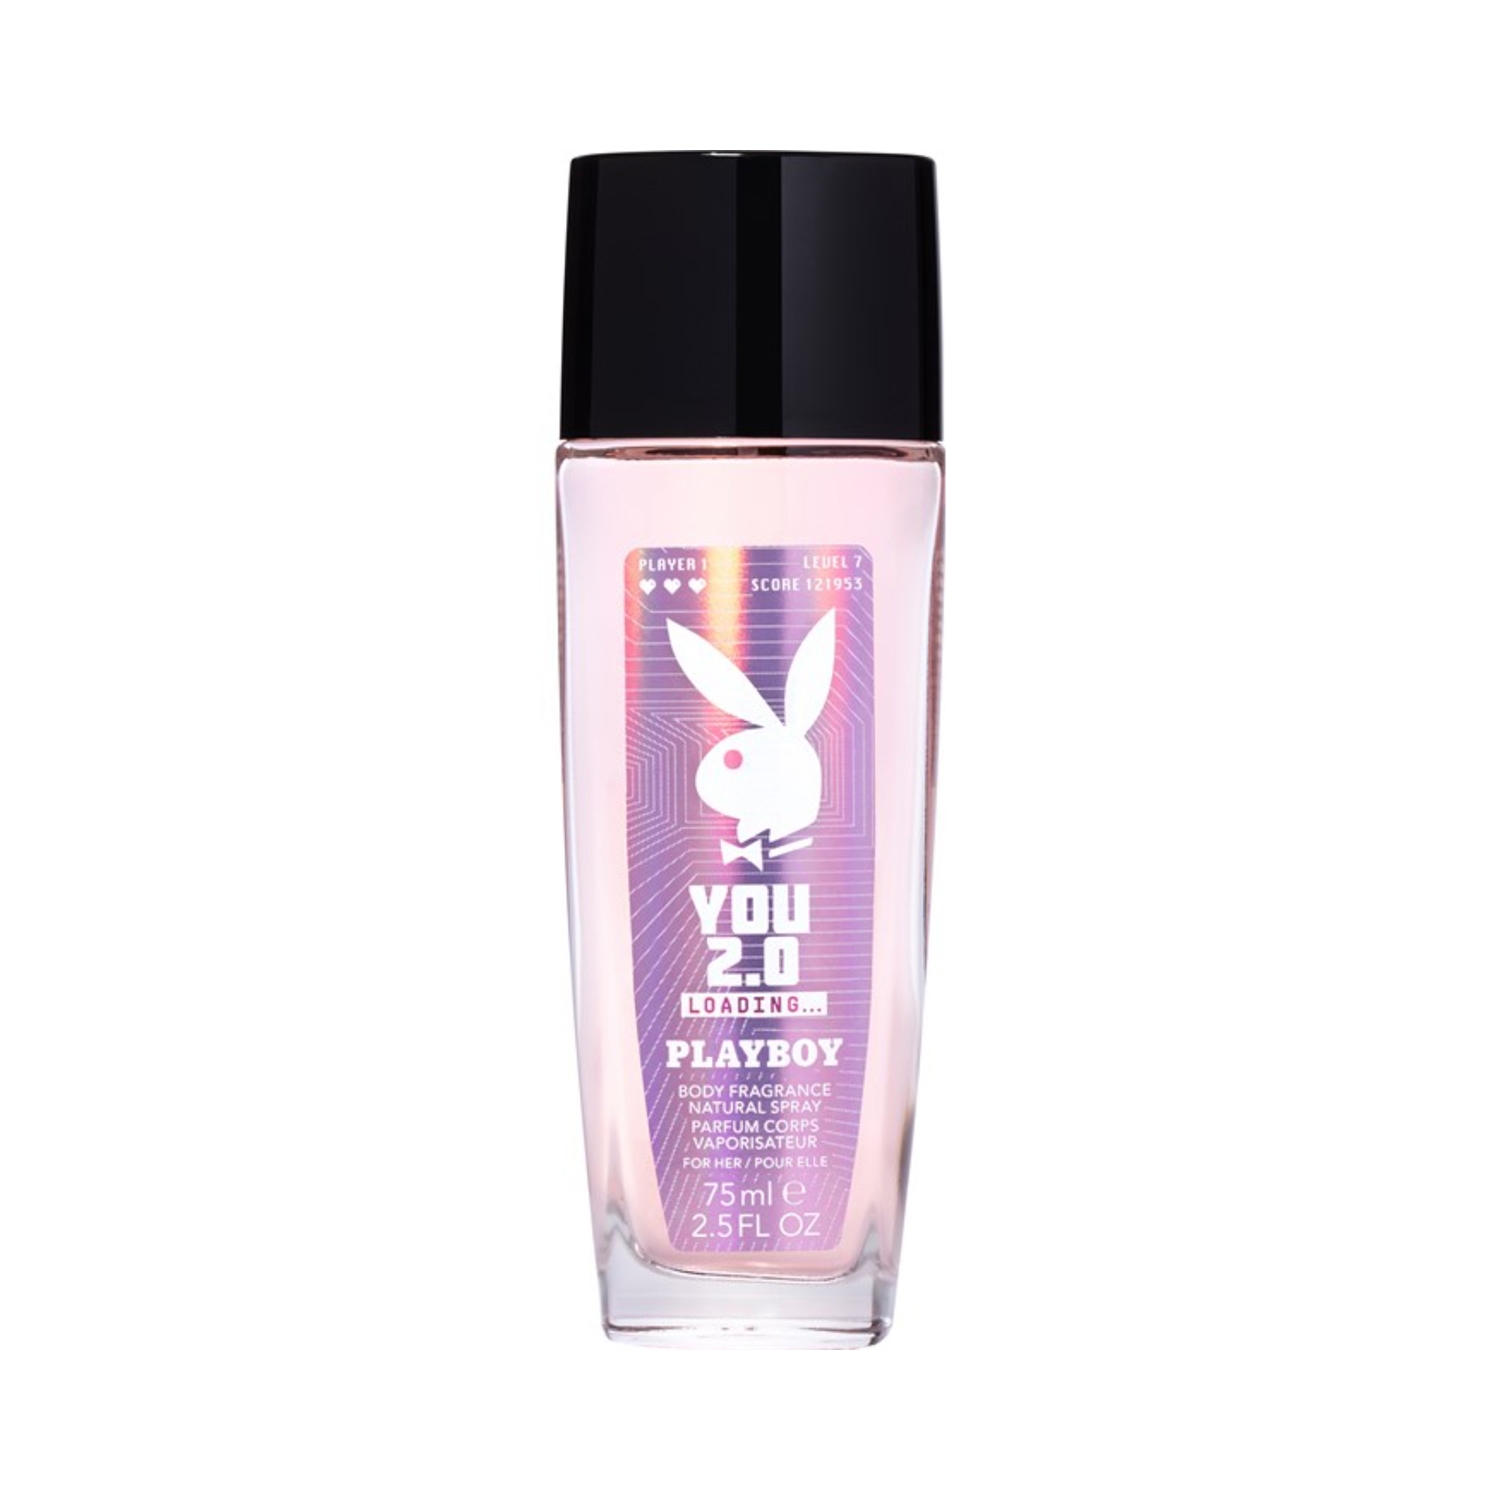 Playboy | Playboy You 2.0 Loading Deodorant Spray (75ml)